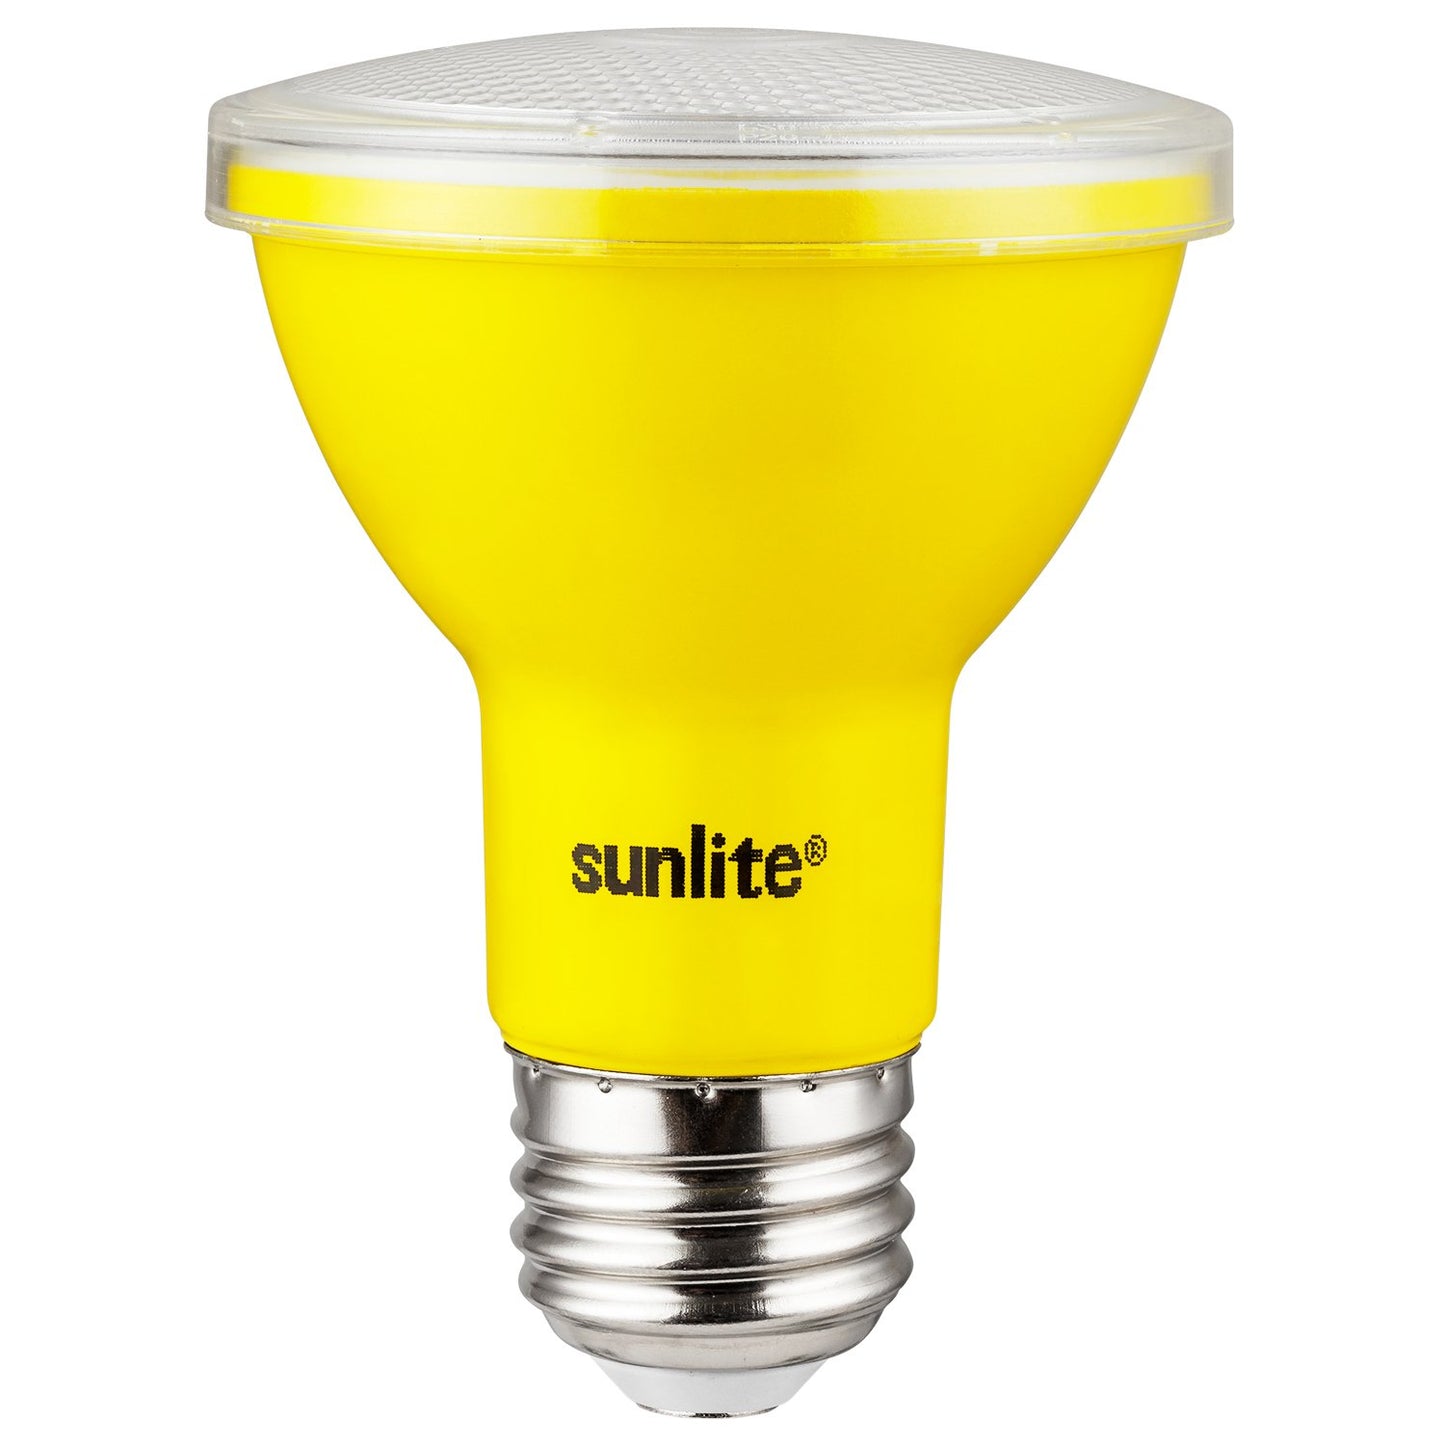 Sunlite - Yellow LED PAR20 Reflector Light Bulb, 3 Watts, 120 Volts, Medium Base, 30,000 Hour Lamp Life, 30 Lumens, Narrow Flood, 30° Beam Angle, Energy Saving, Multi-Use, Indoor/Outdoor (6 Pack)